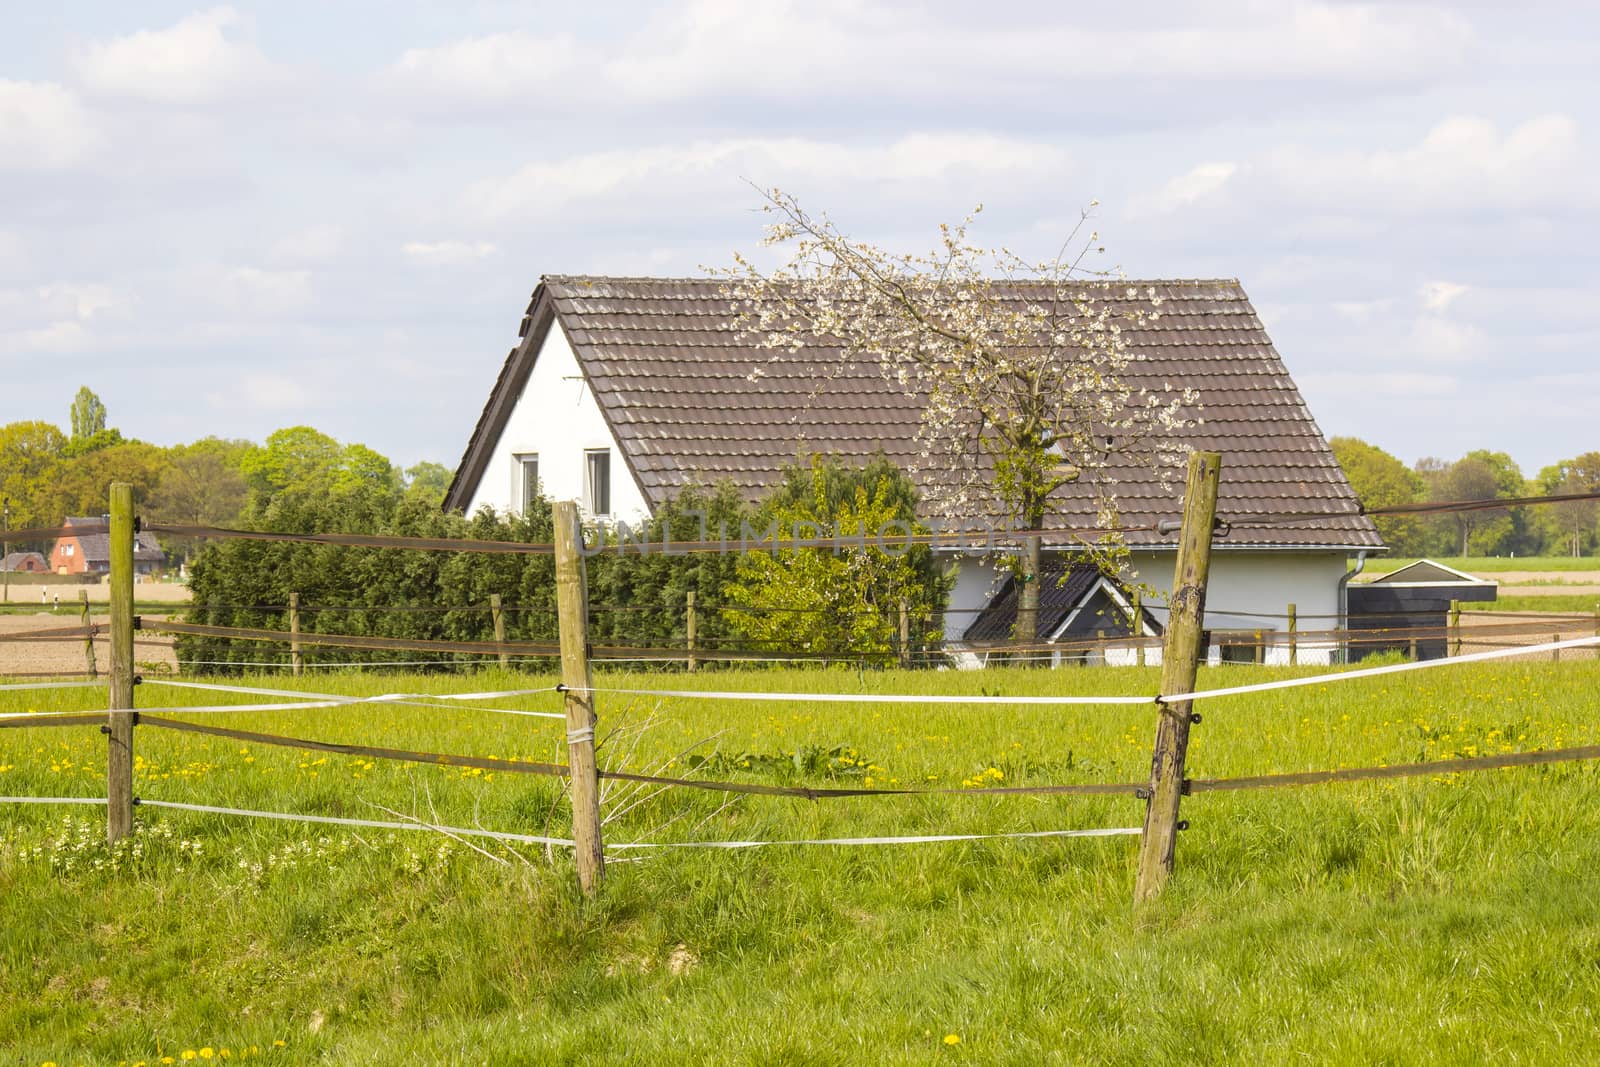 rural house at Lower Rhine, Germany by miradrozdowski